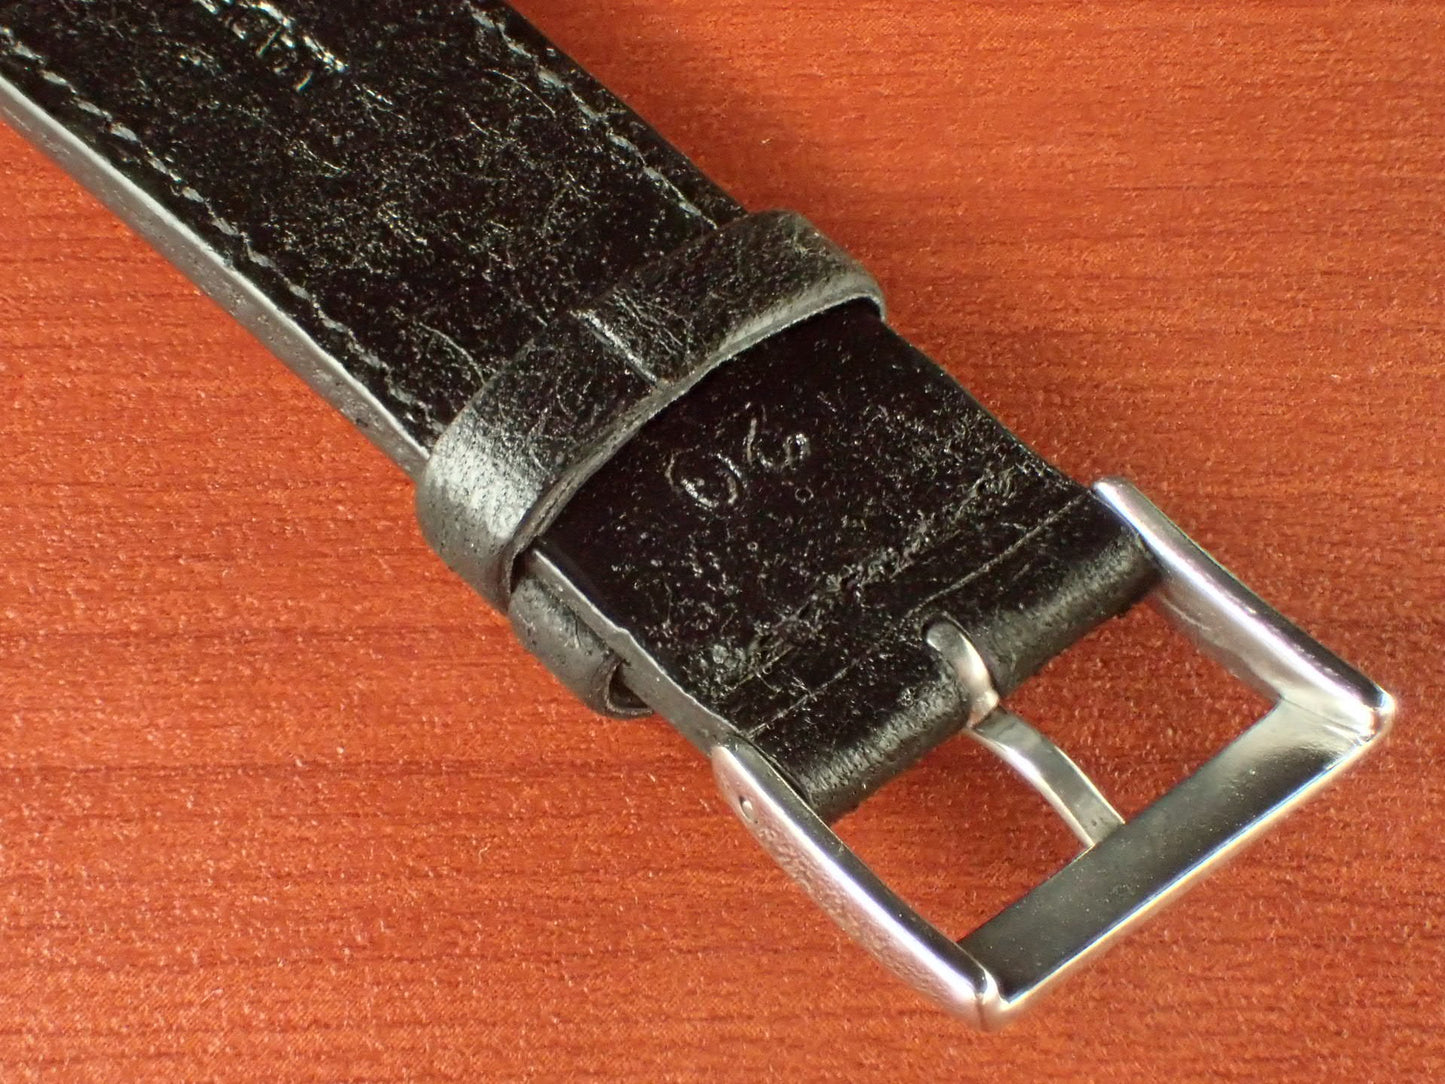 Virgilio VIVIDO Shoulder leather strap (Black)